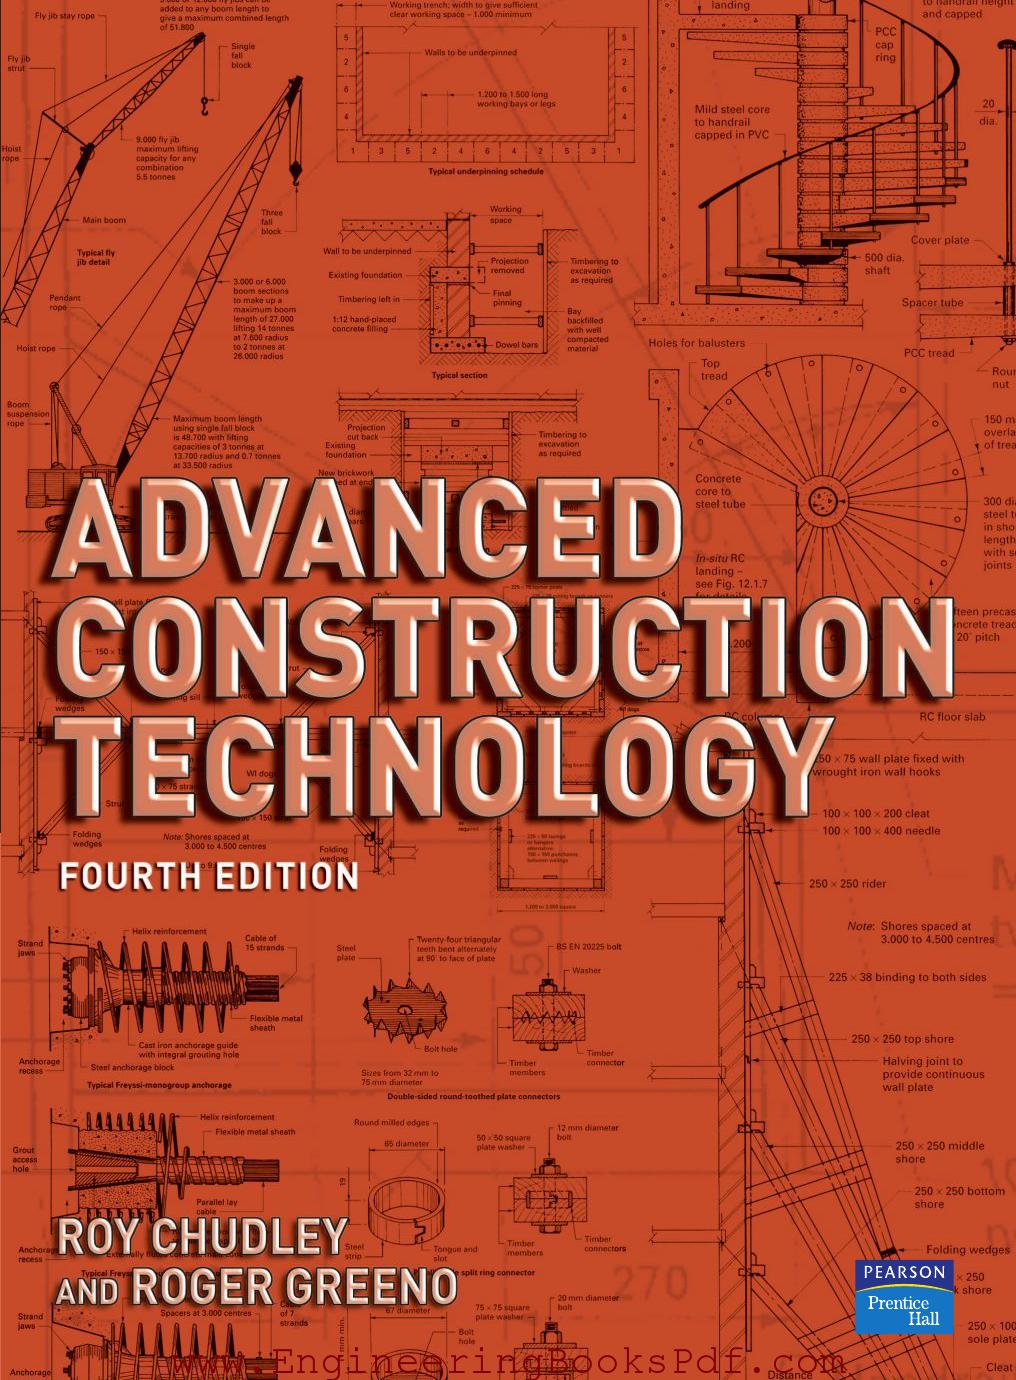 ADVANCED CONSTRUCTION TECHNOLOGY